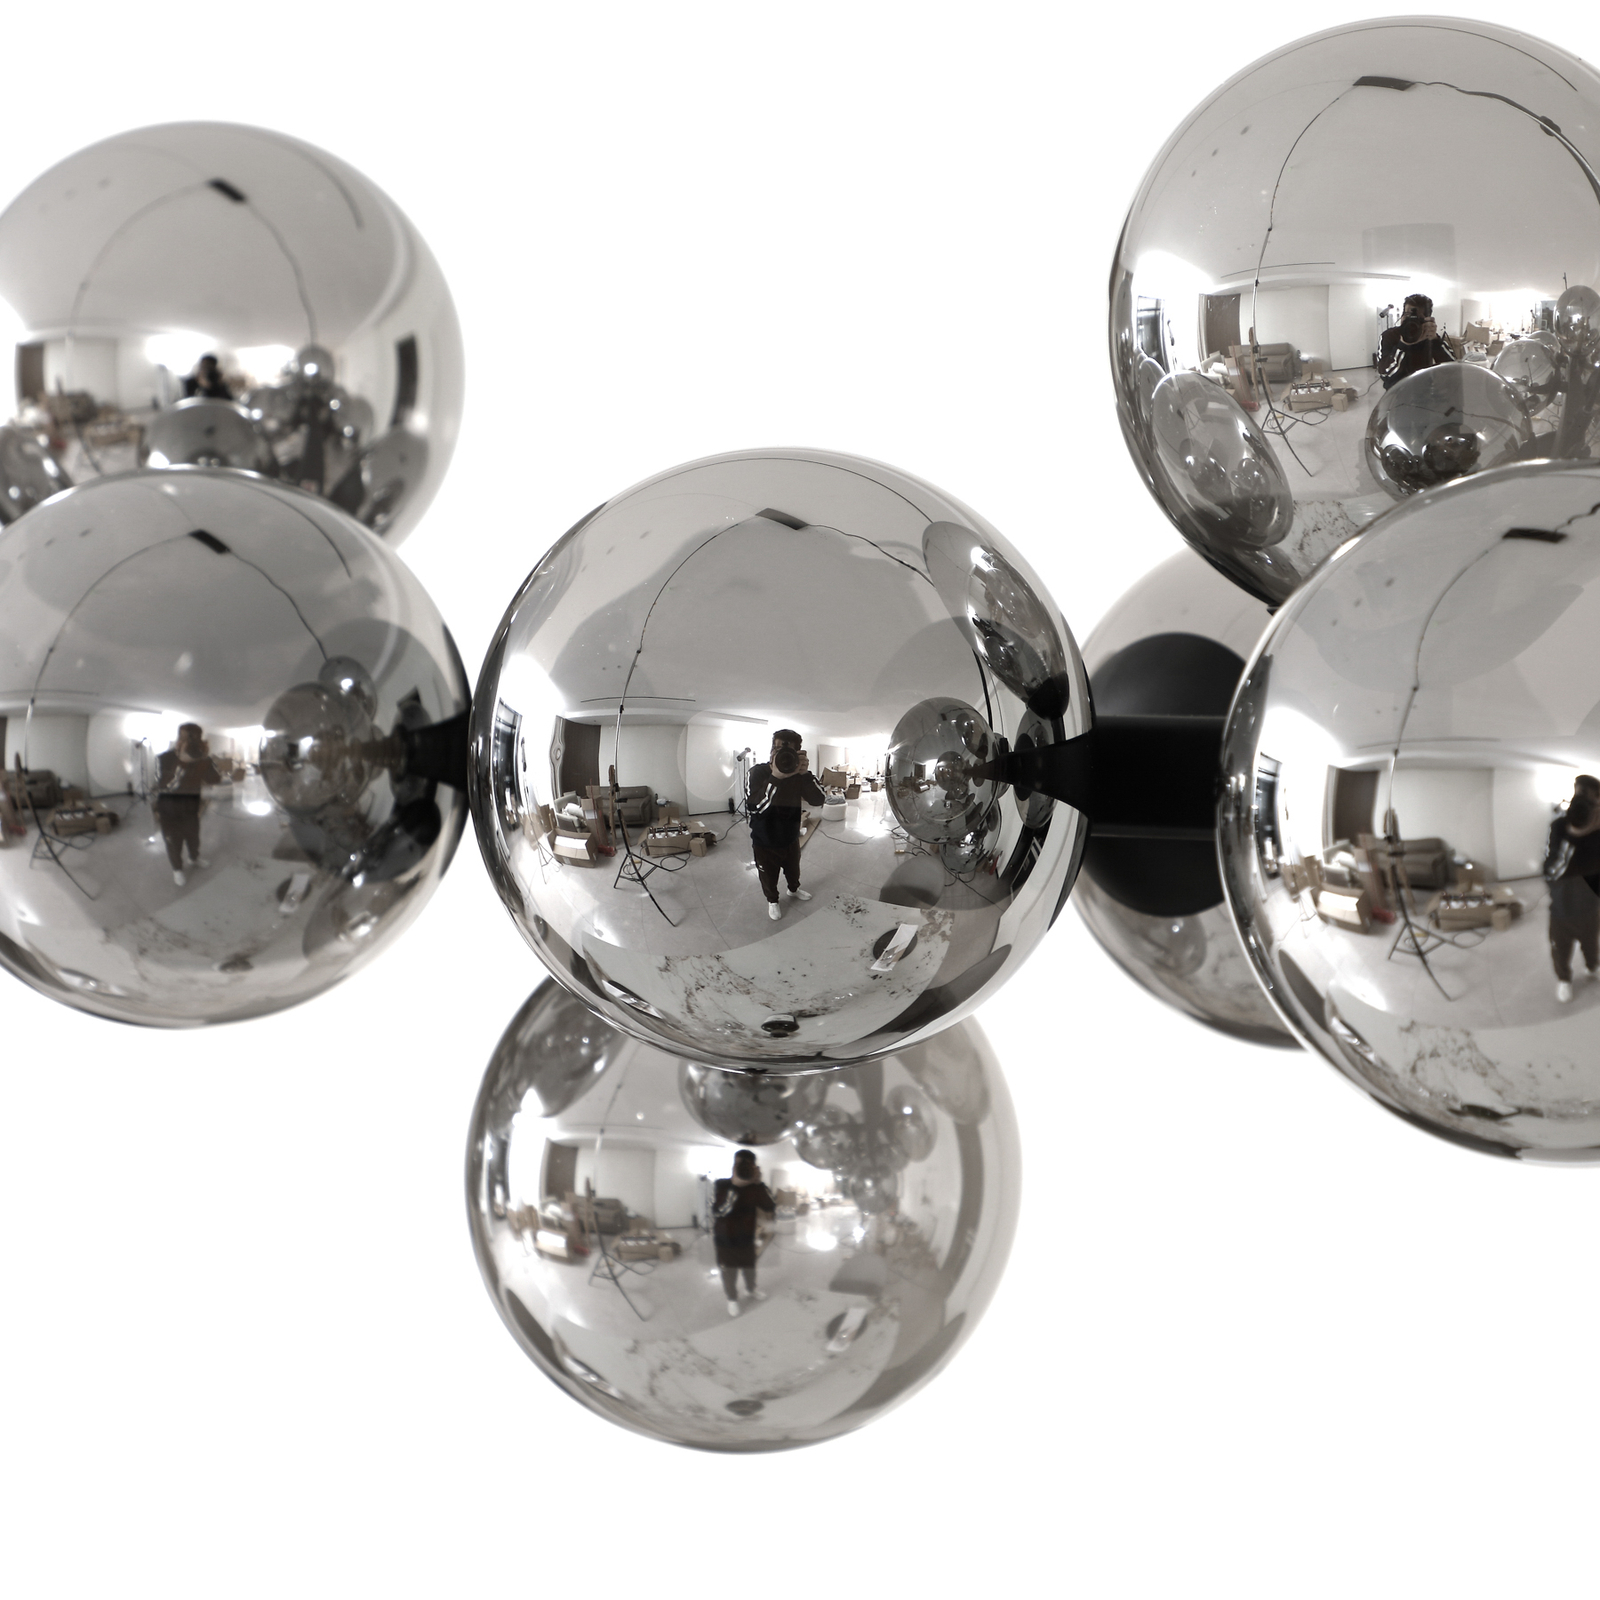 Lucande hanglamp Naelen, zwart/grijs, 125 cm, glas, G9